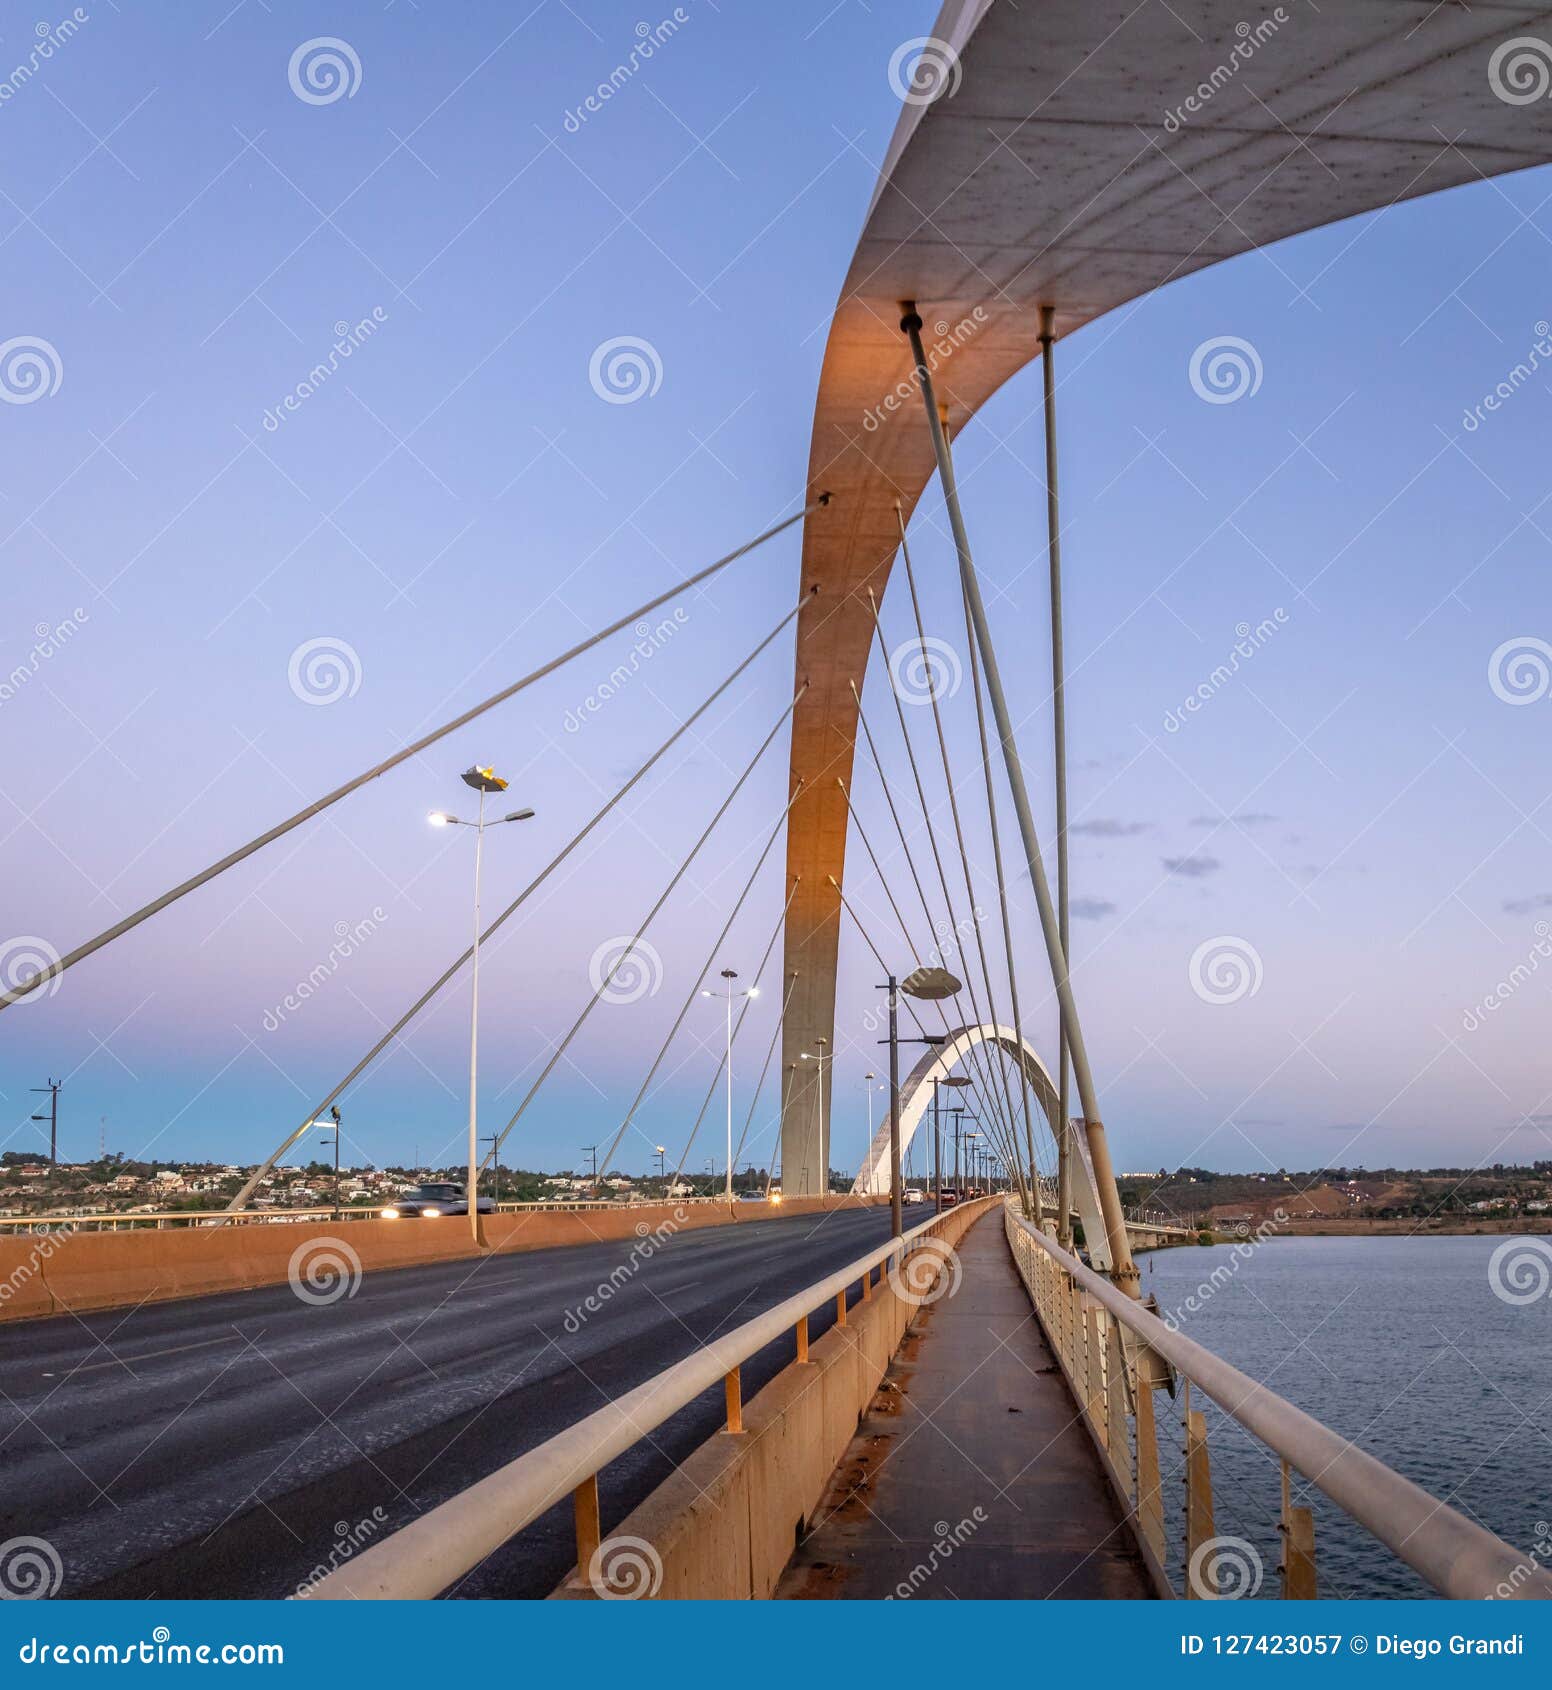 jk bridge at sunset - brasilia, distrito federal, brazil